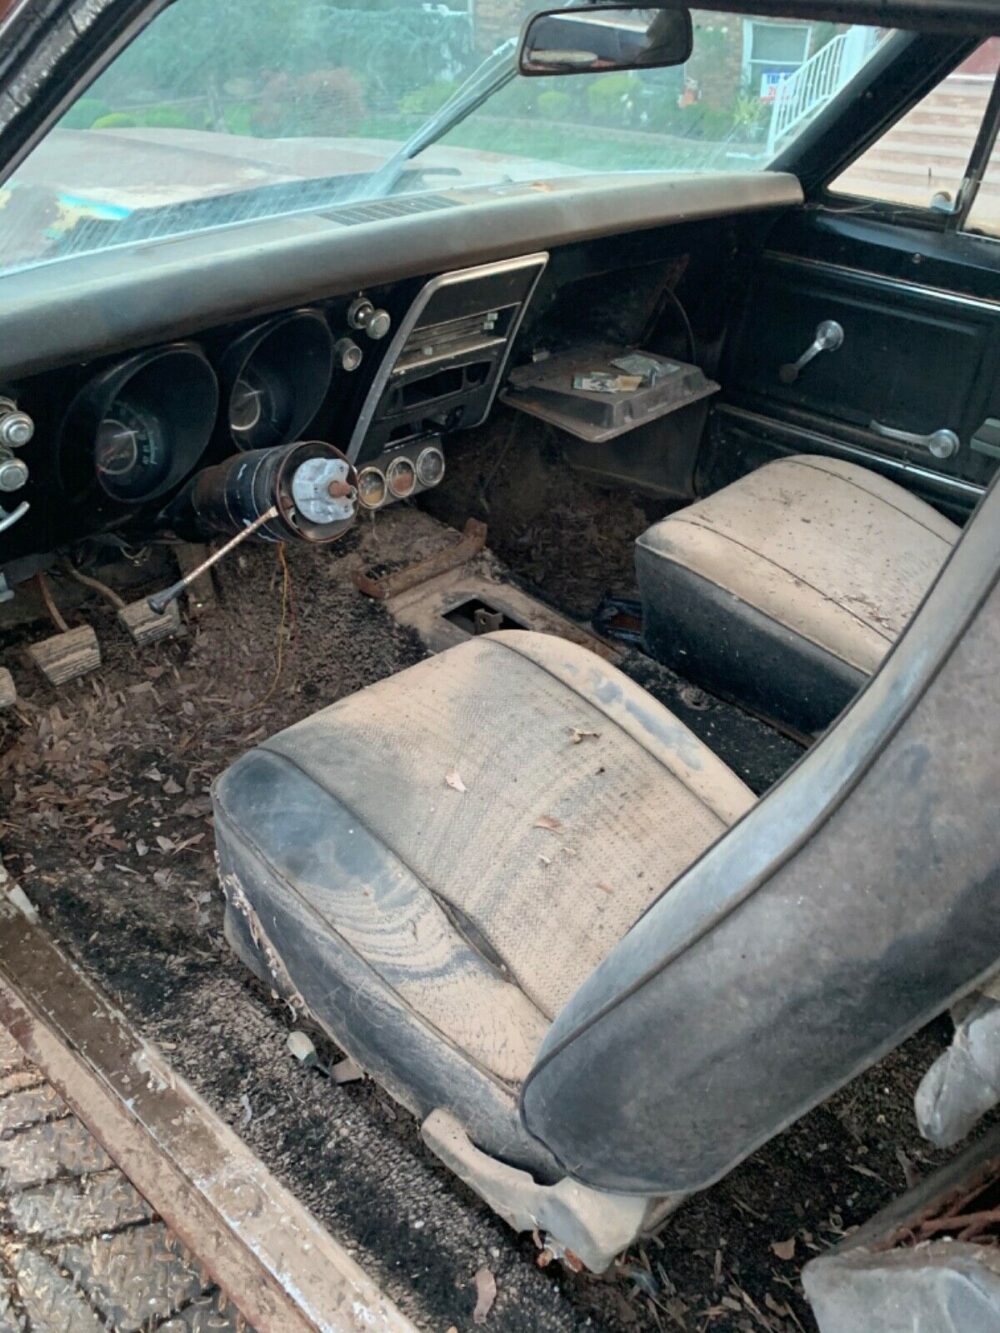 Rusty '67 Camaro